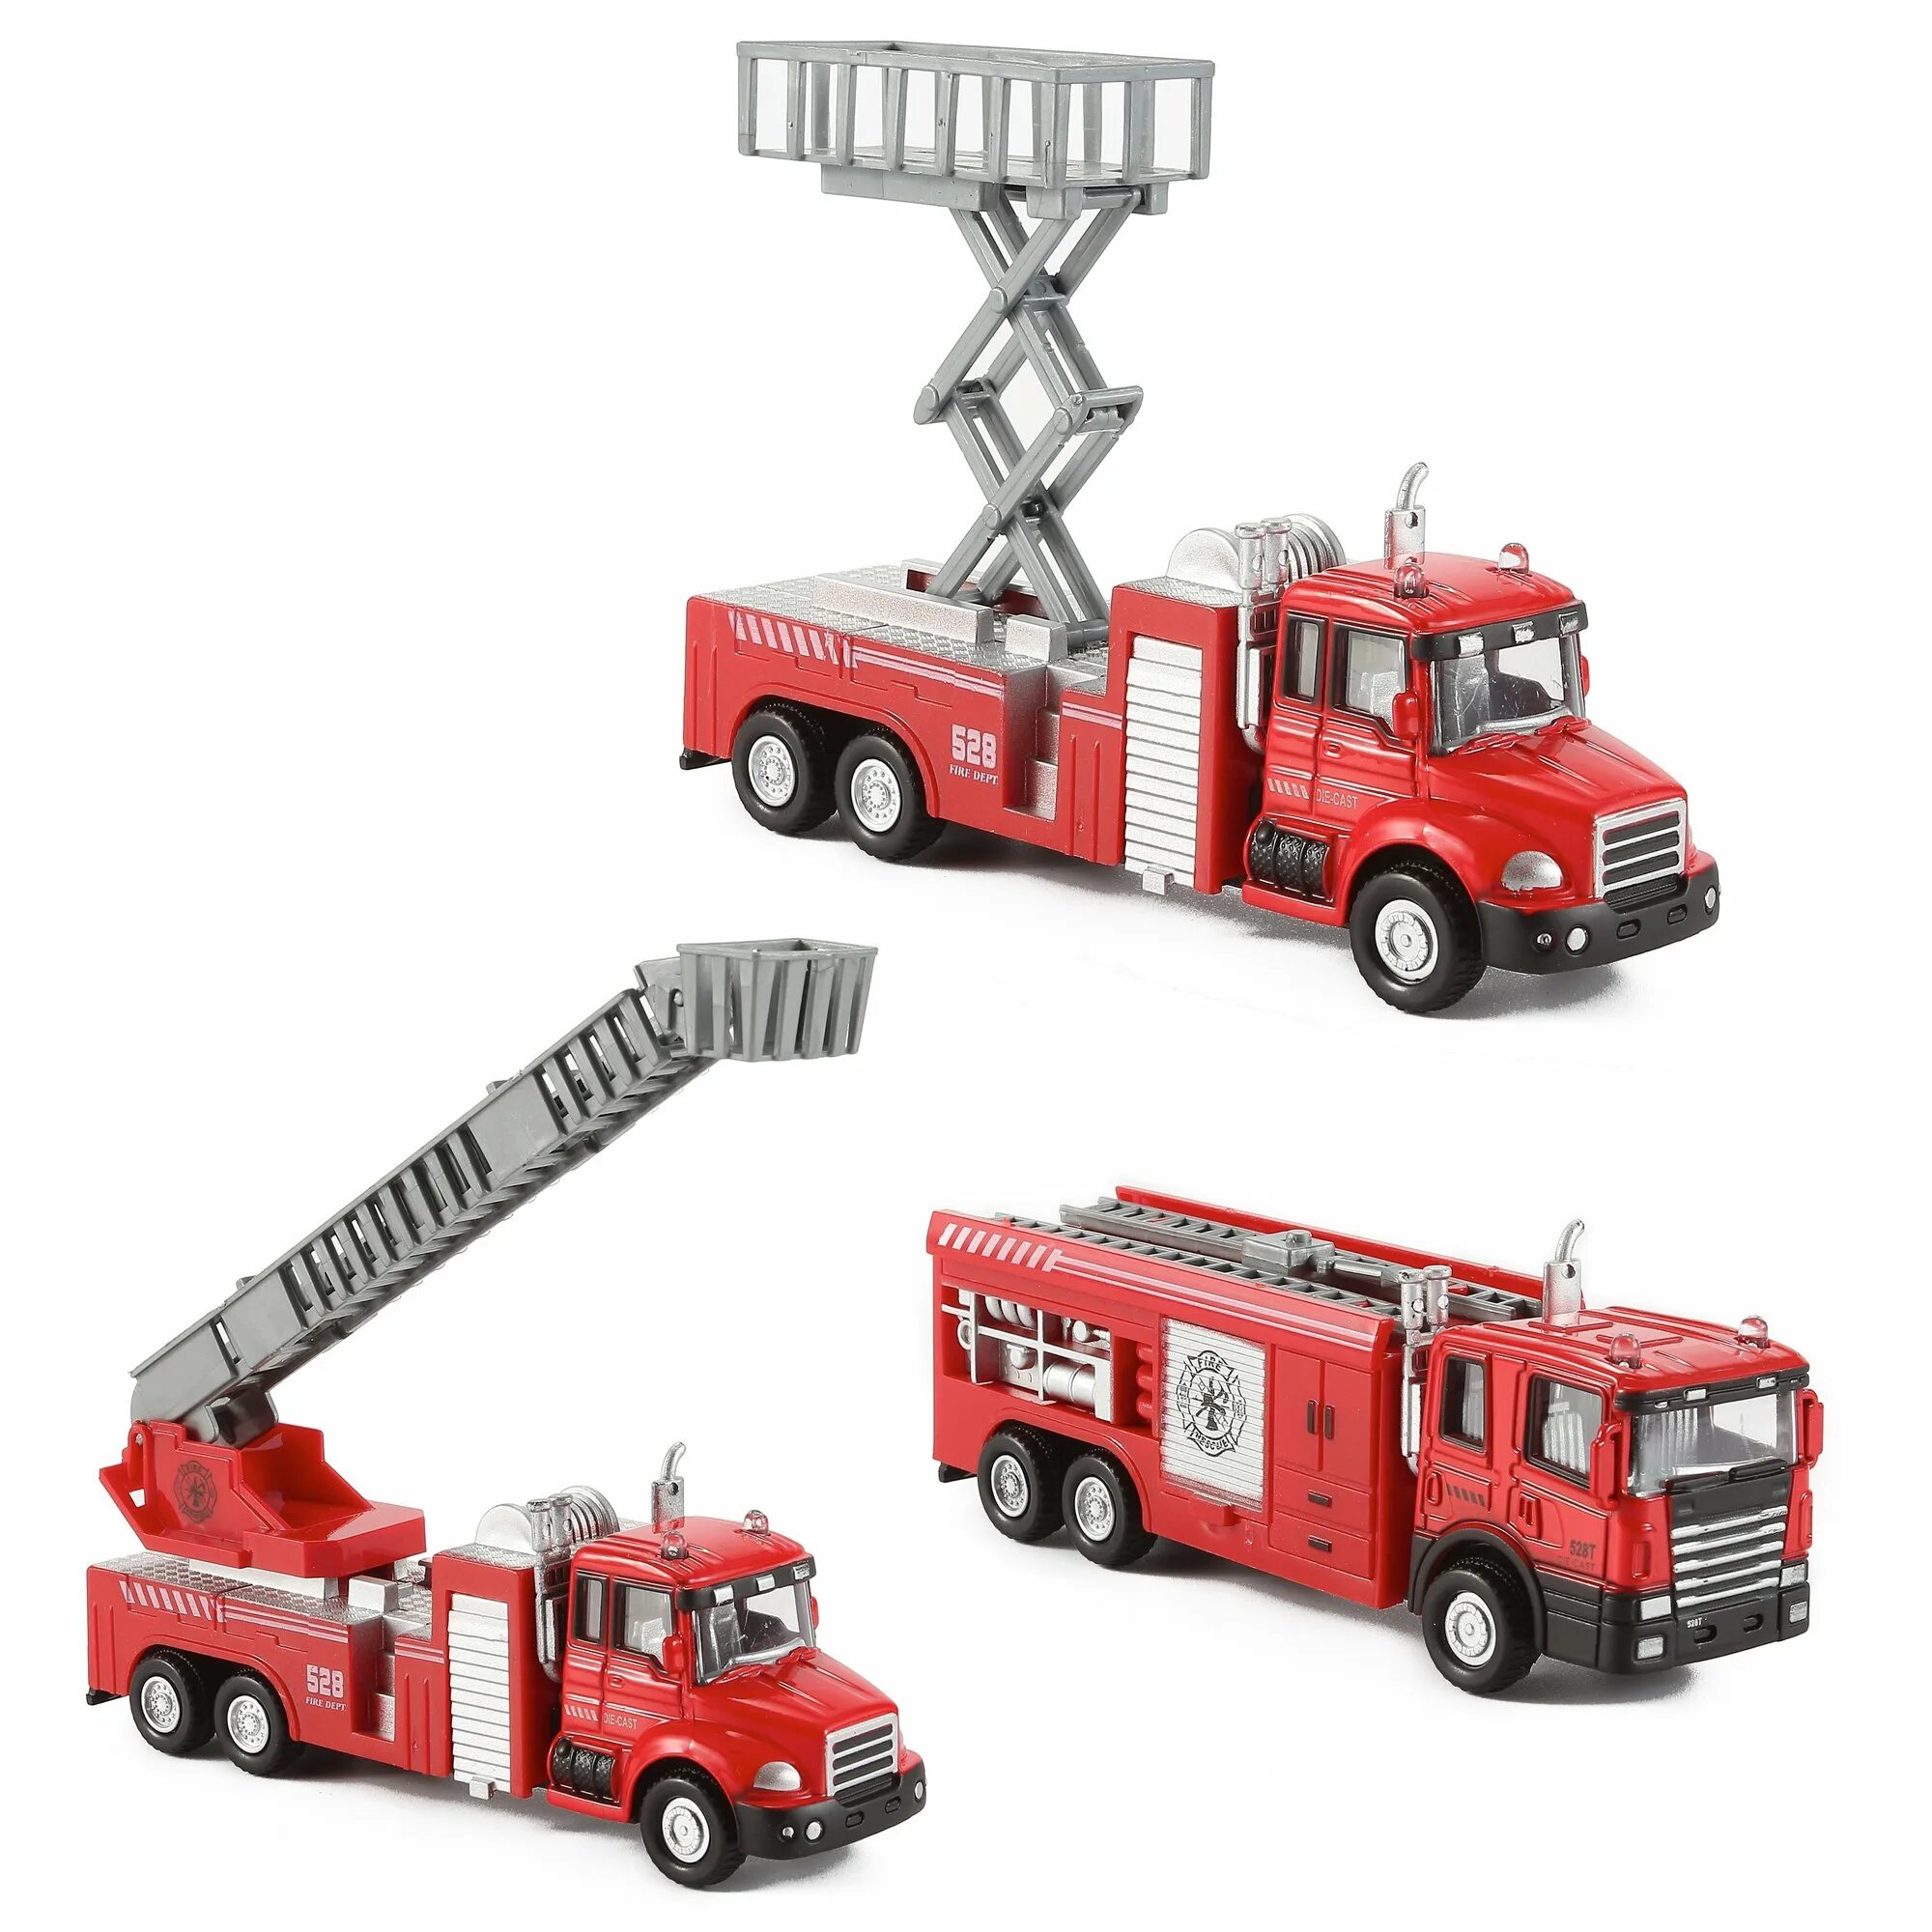 Конструктор Boyuan Toys 8755 пожарная машина. Пожарная машина Metz игрушка. Matchbox пожарная машина трансформер. Пожарная машинка (20 см) Fire-Fighting vehicle. Машинки пожарная машина